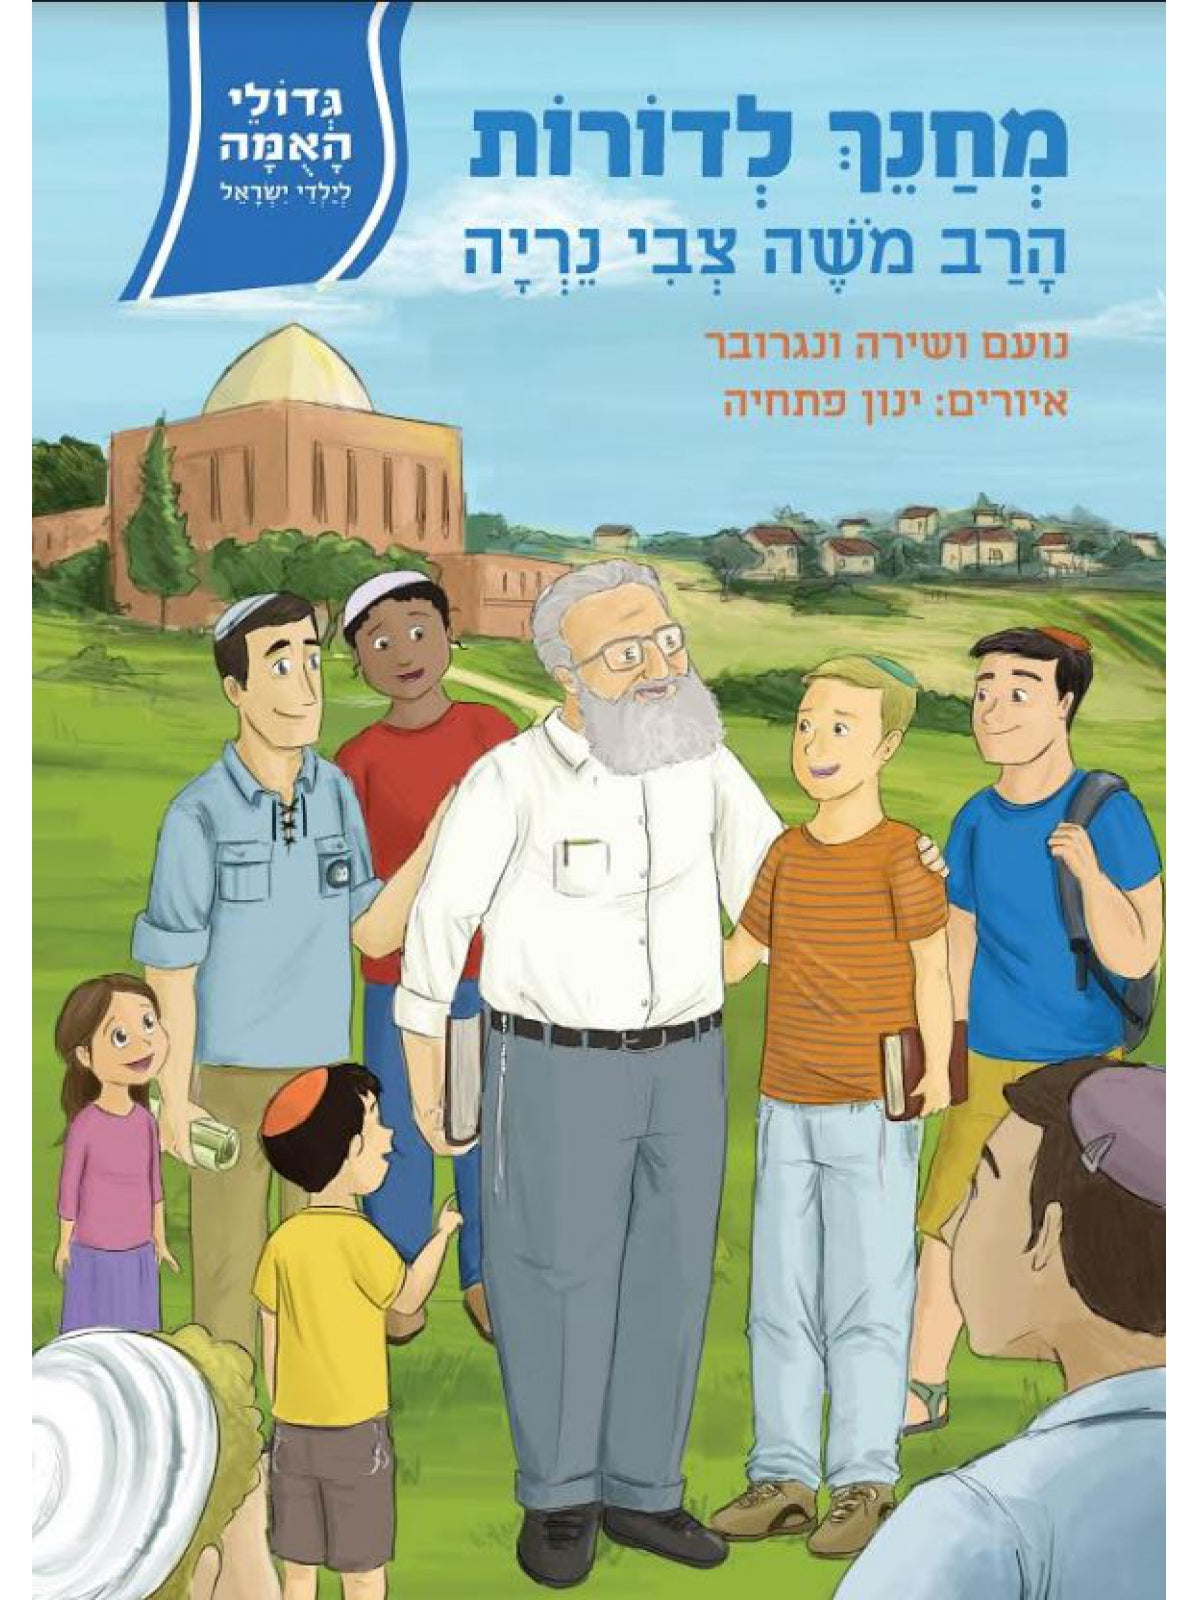 EDUCATOR FOR GENERATIONS, RABBI MOSHE ZVI NERIA, THE GREAT ELDERS OF THE CHILDREN OF ISRAEL